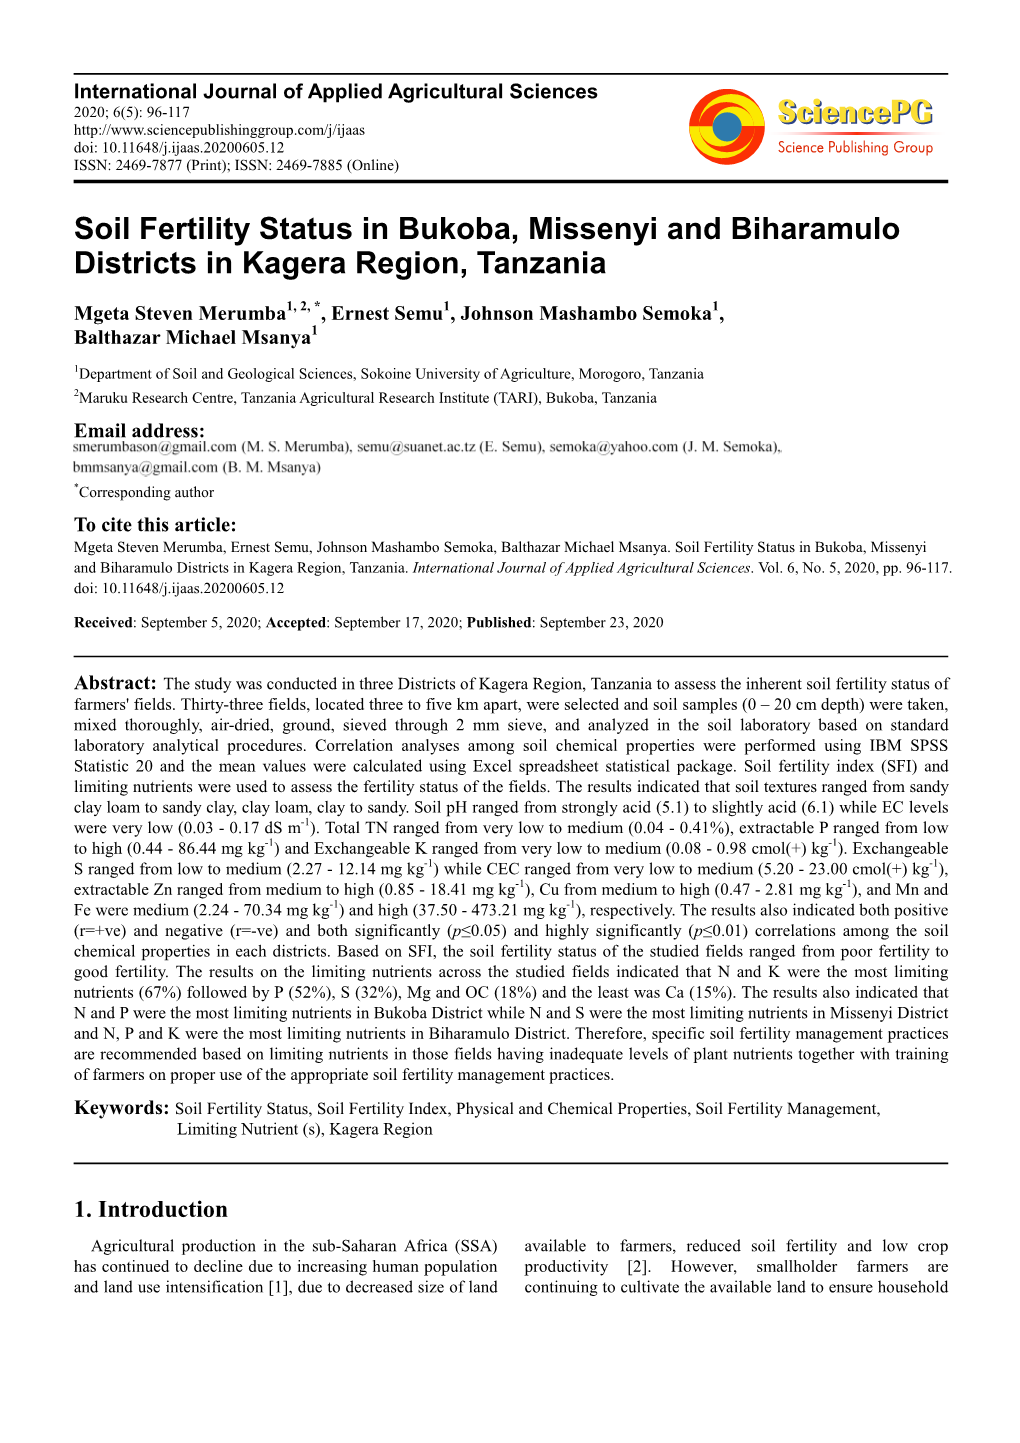 Soil Fertility Status in Bukoba, Missenyi and Biharamulo Districts in Kagera Region, Tanzania